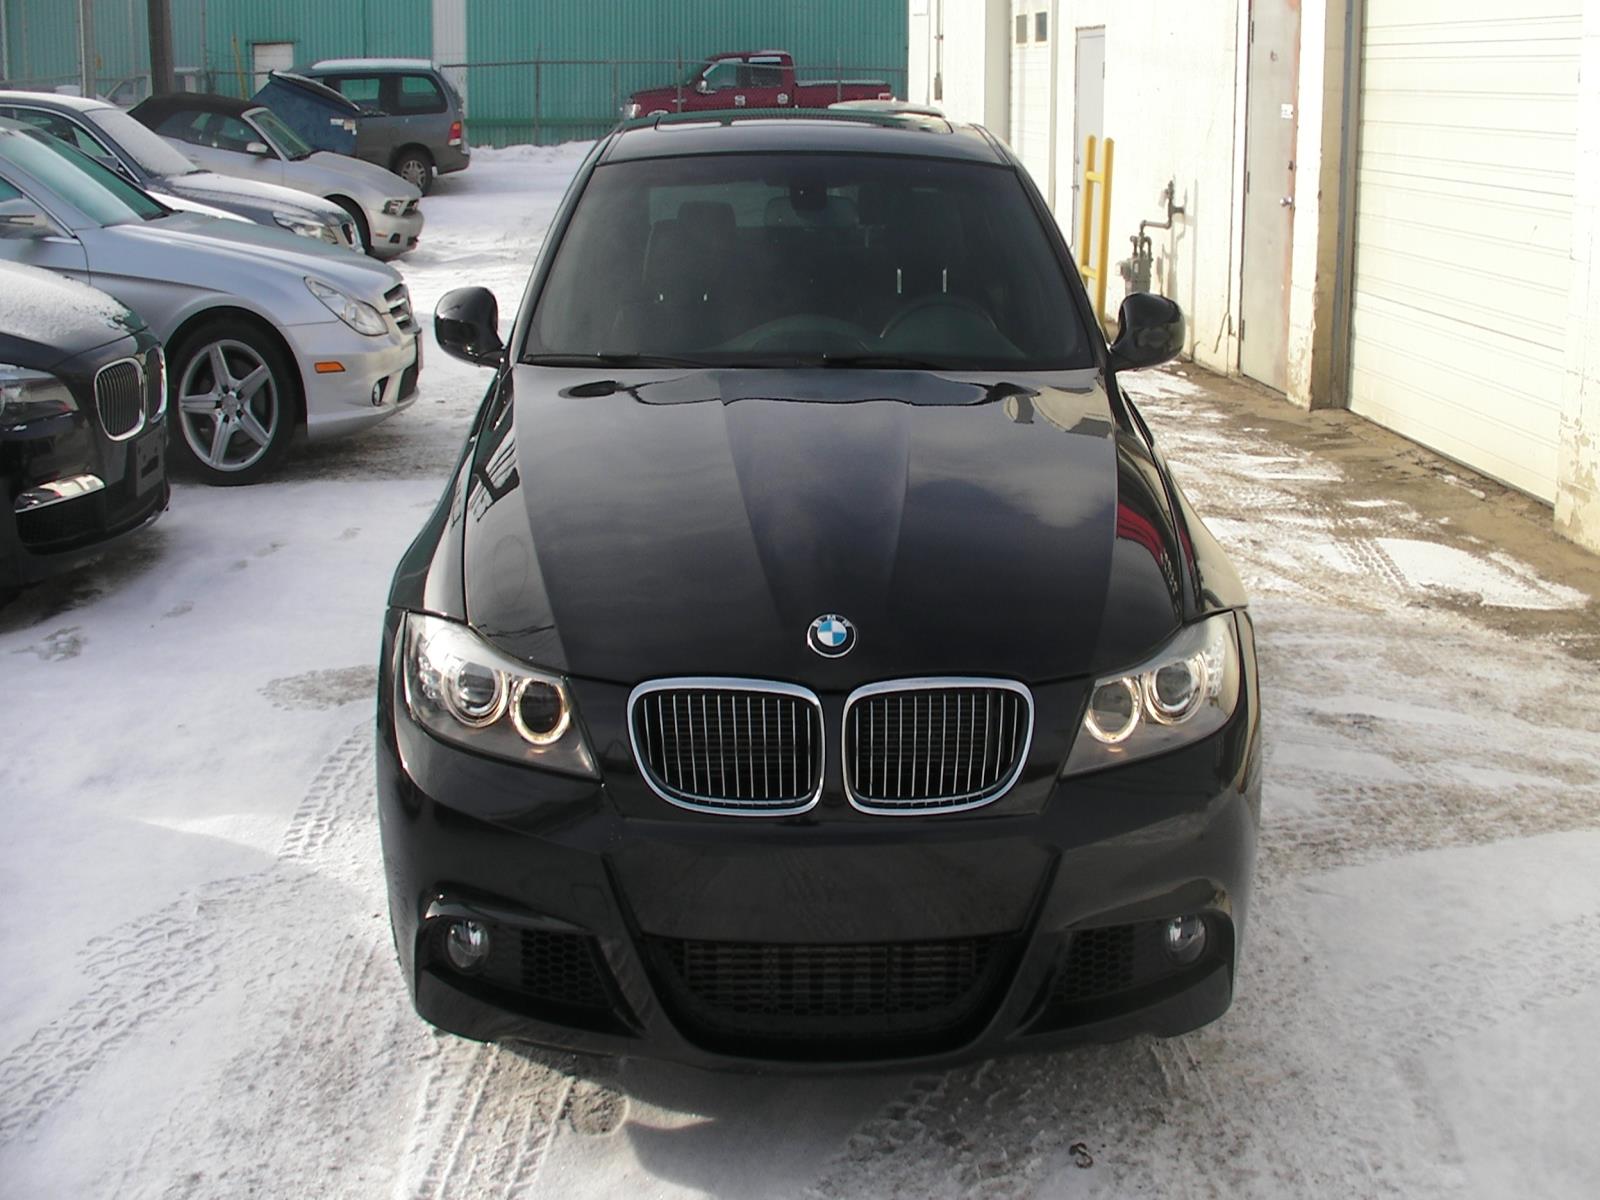  BMW 335d in Edmonton, Alberta, $